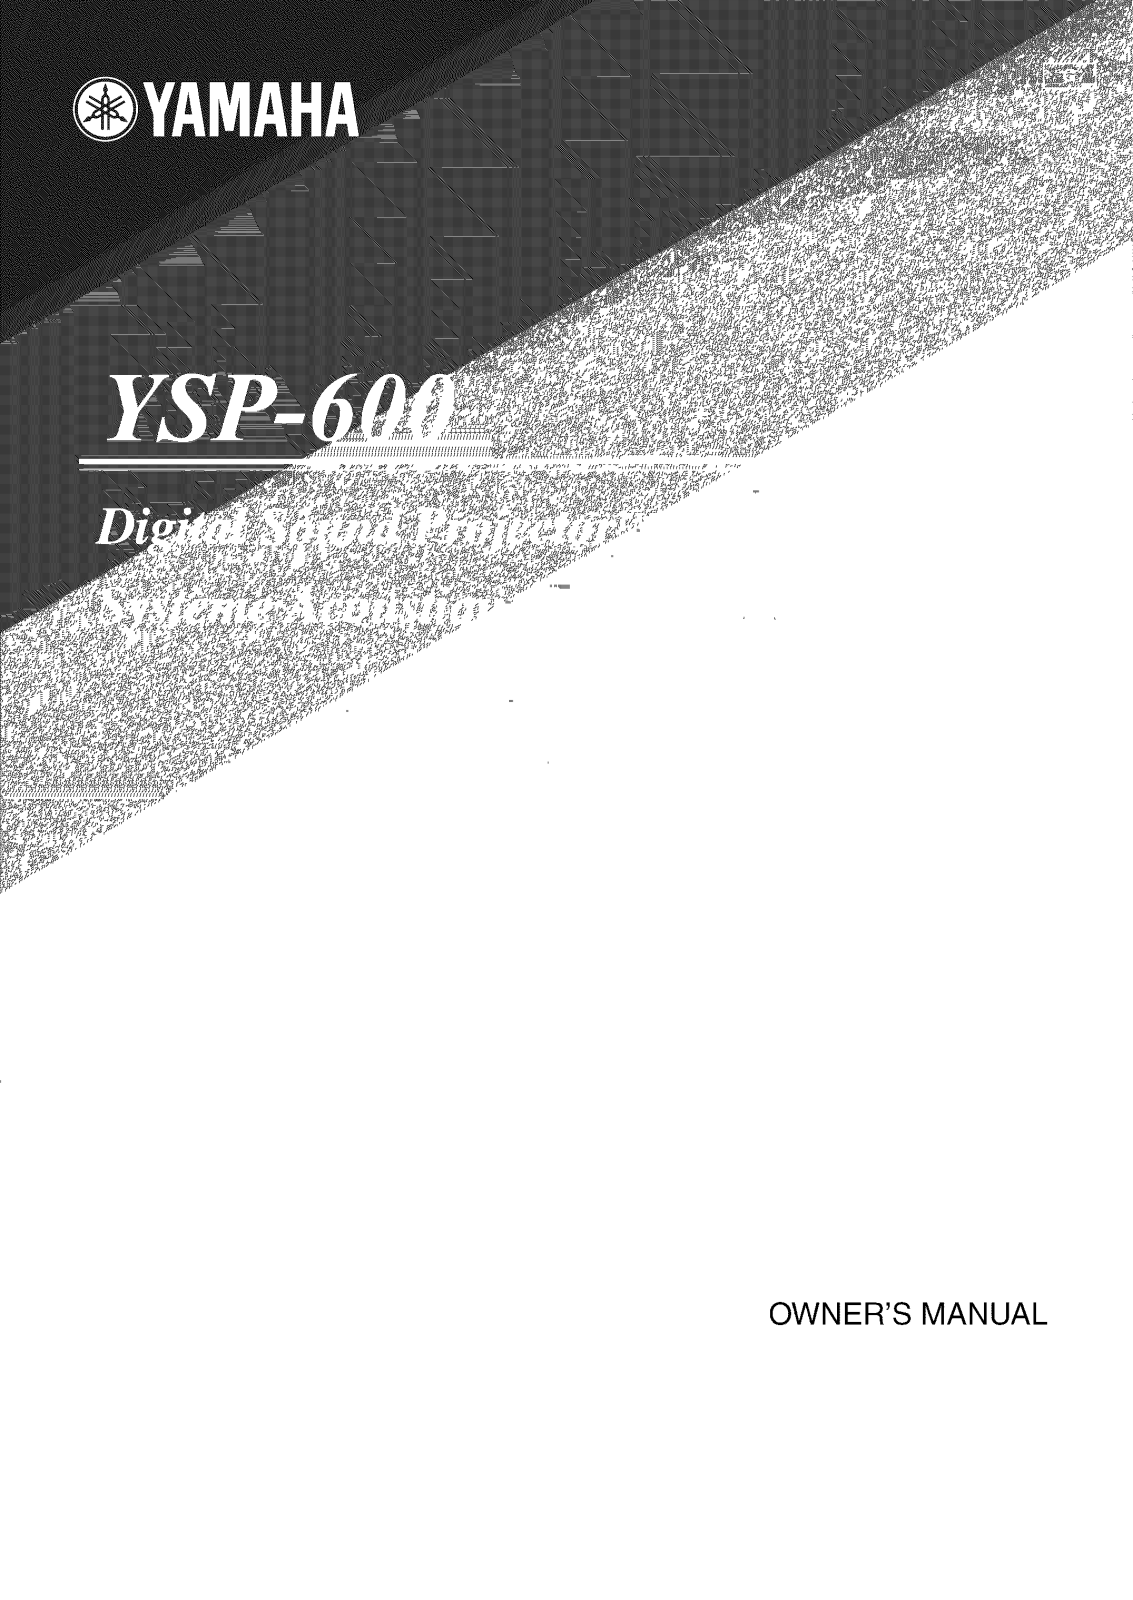 Yamaha YSP-600 Owner’s Manual